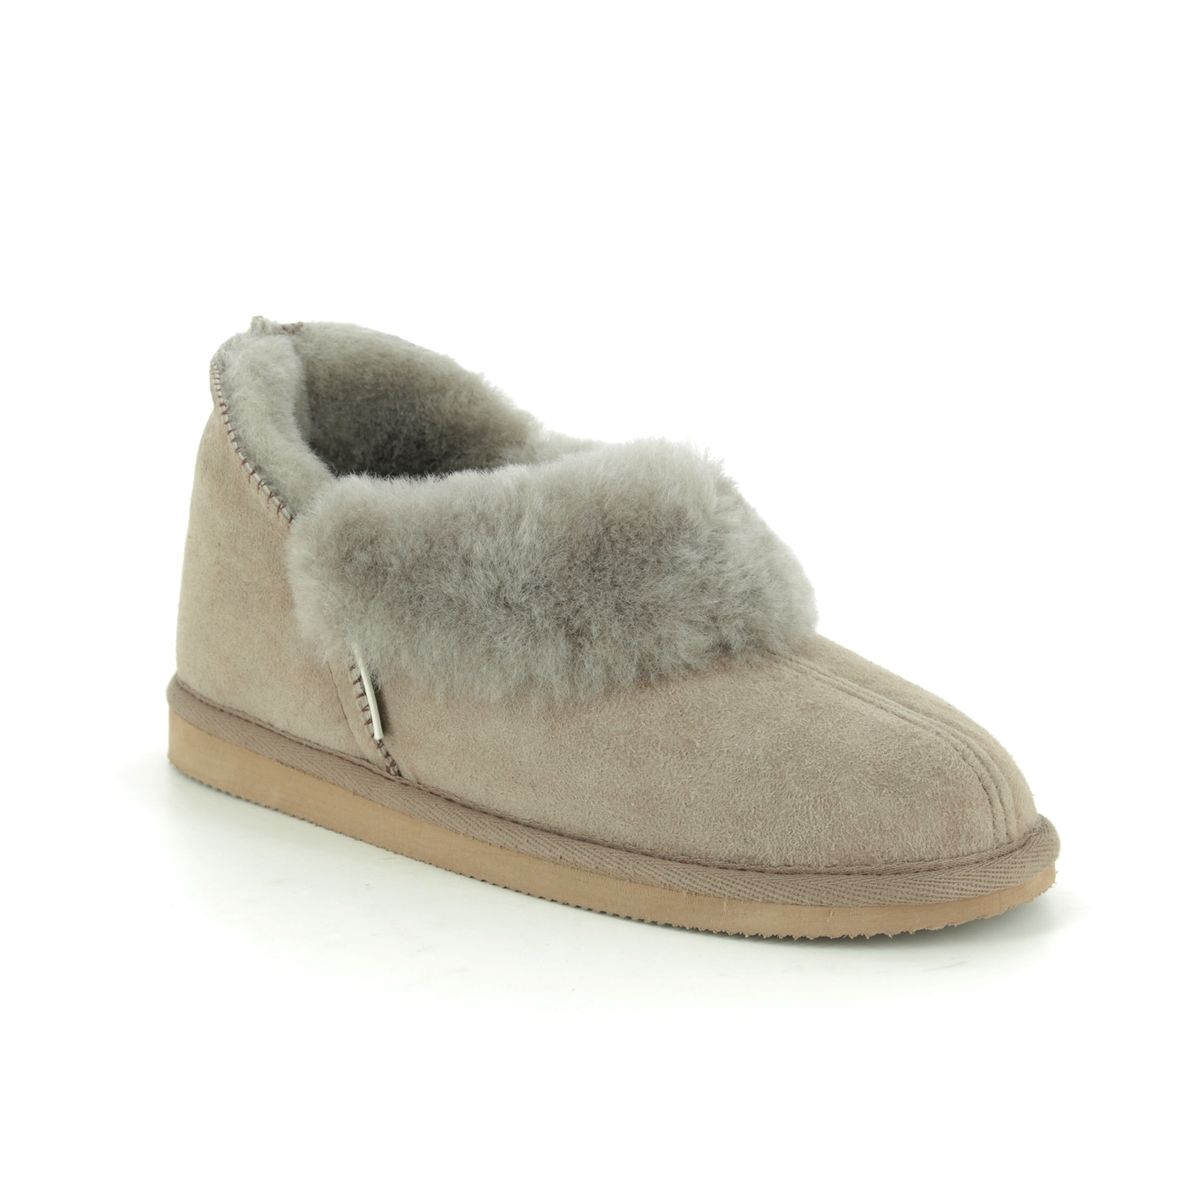 Shepherd of Sweden Karin LIGHT GREY SUEDE Womens slippers 0464-025 in a Plain Leather in Size 38